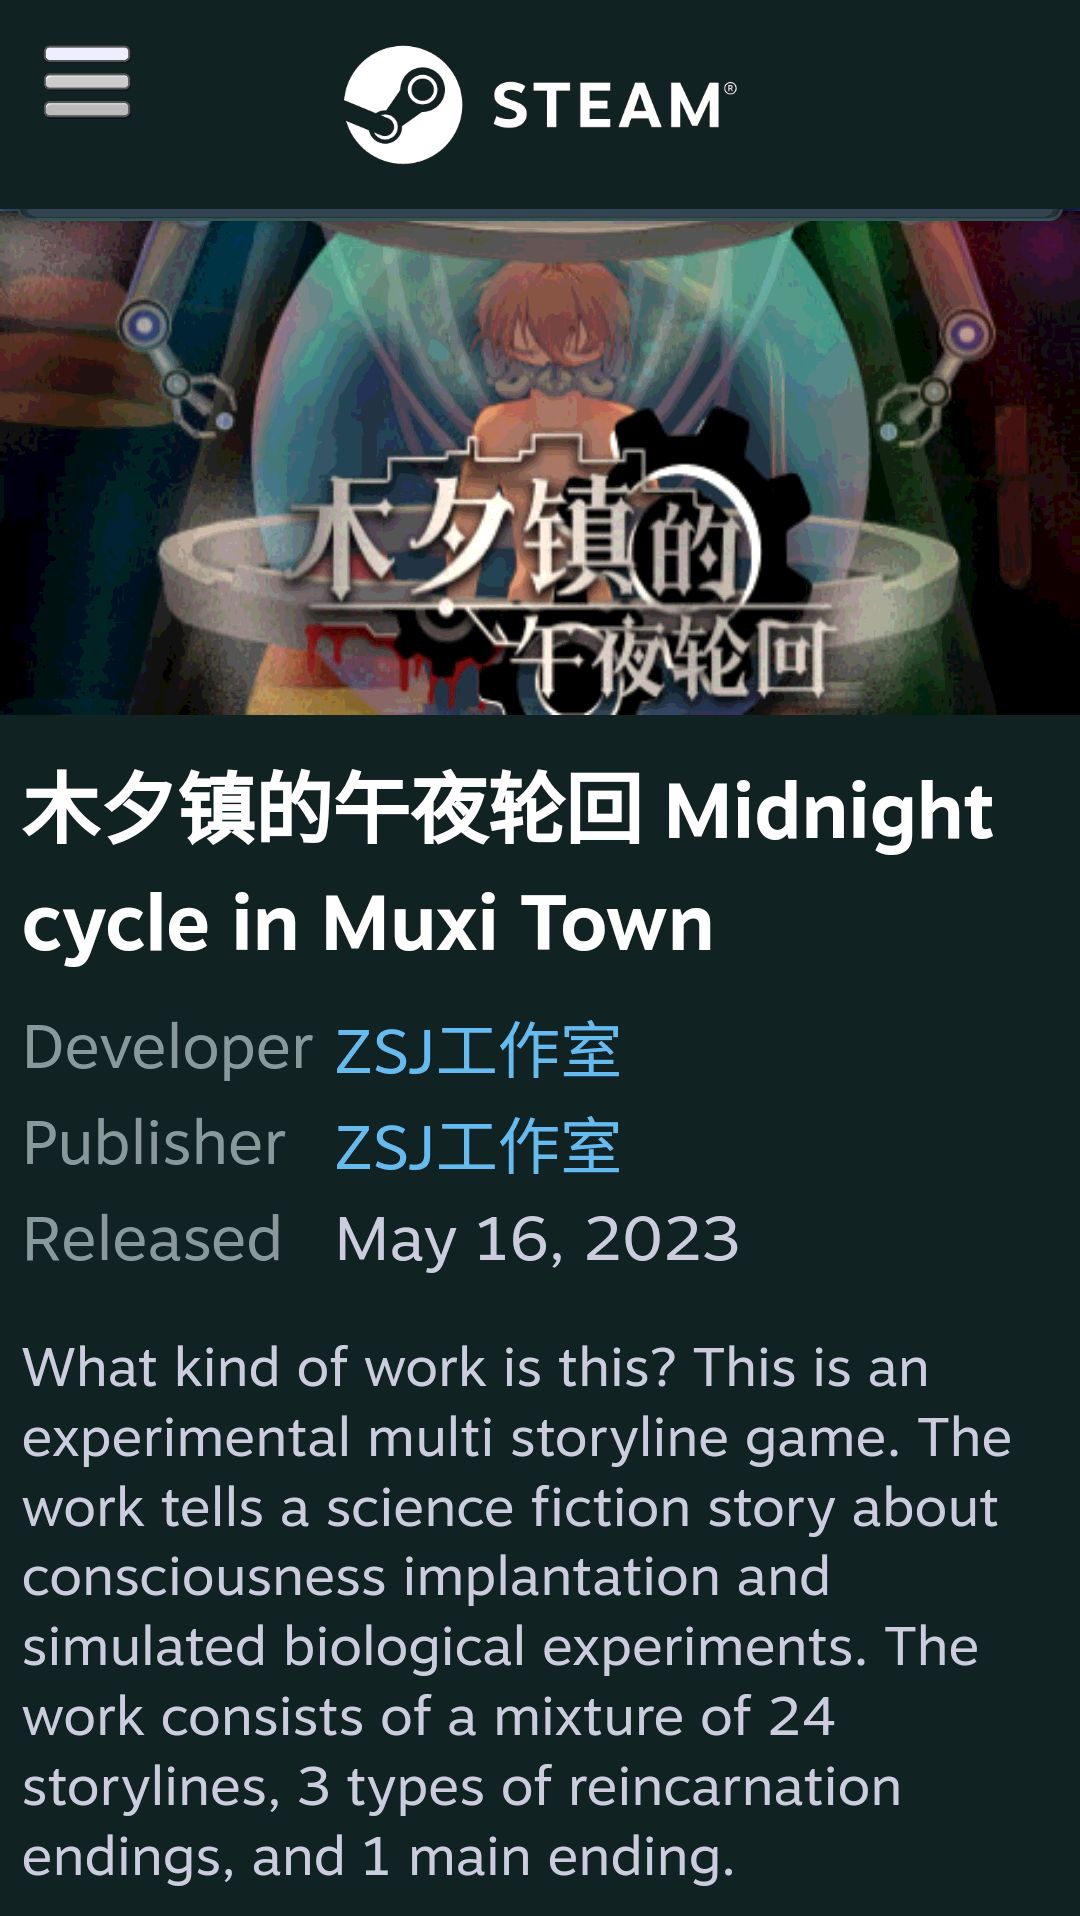 木夕镇的午夜轮回 Midnight cycle in Muxi Town on Steam